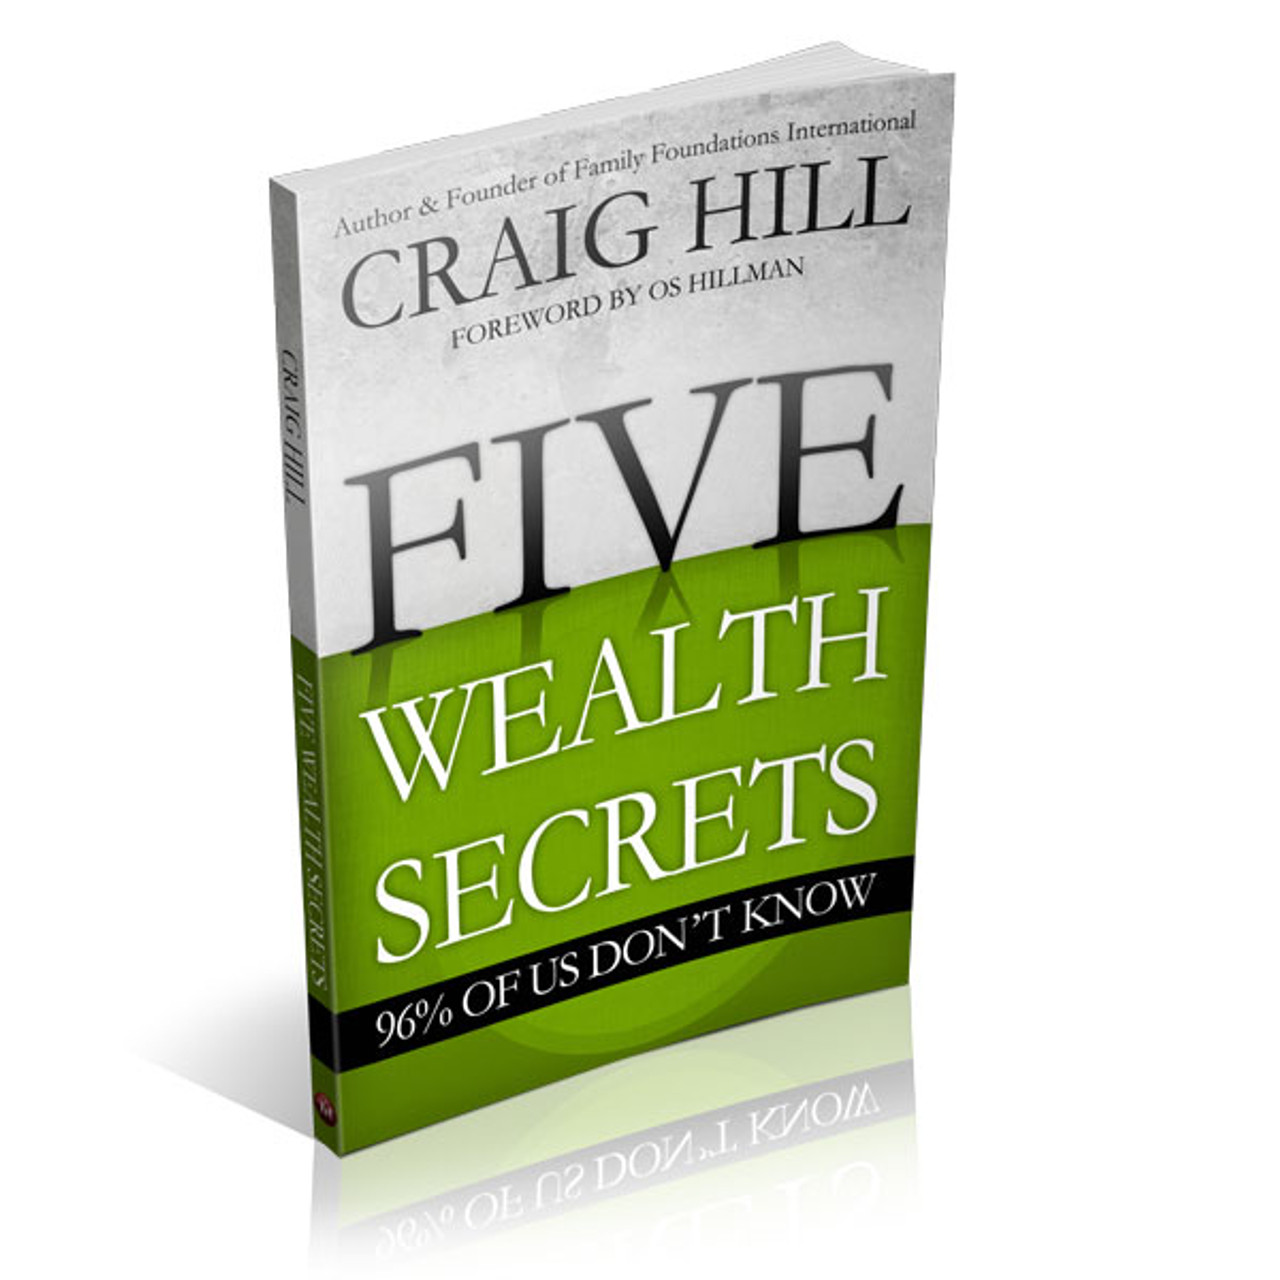 craig hill five wealth secrets pdf